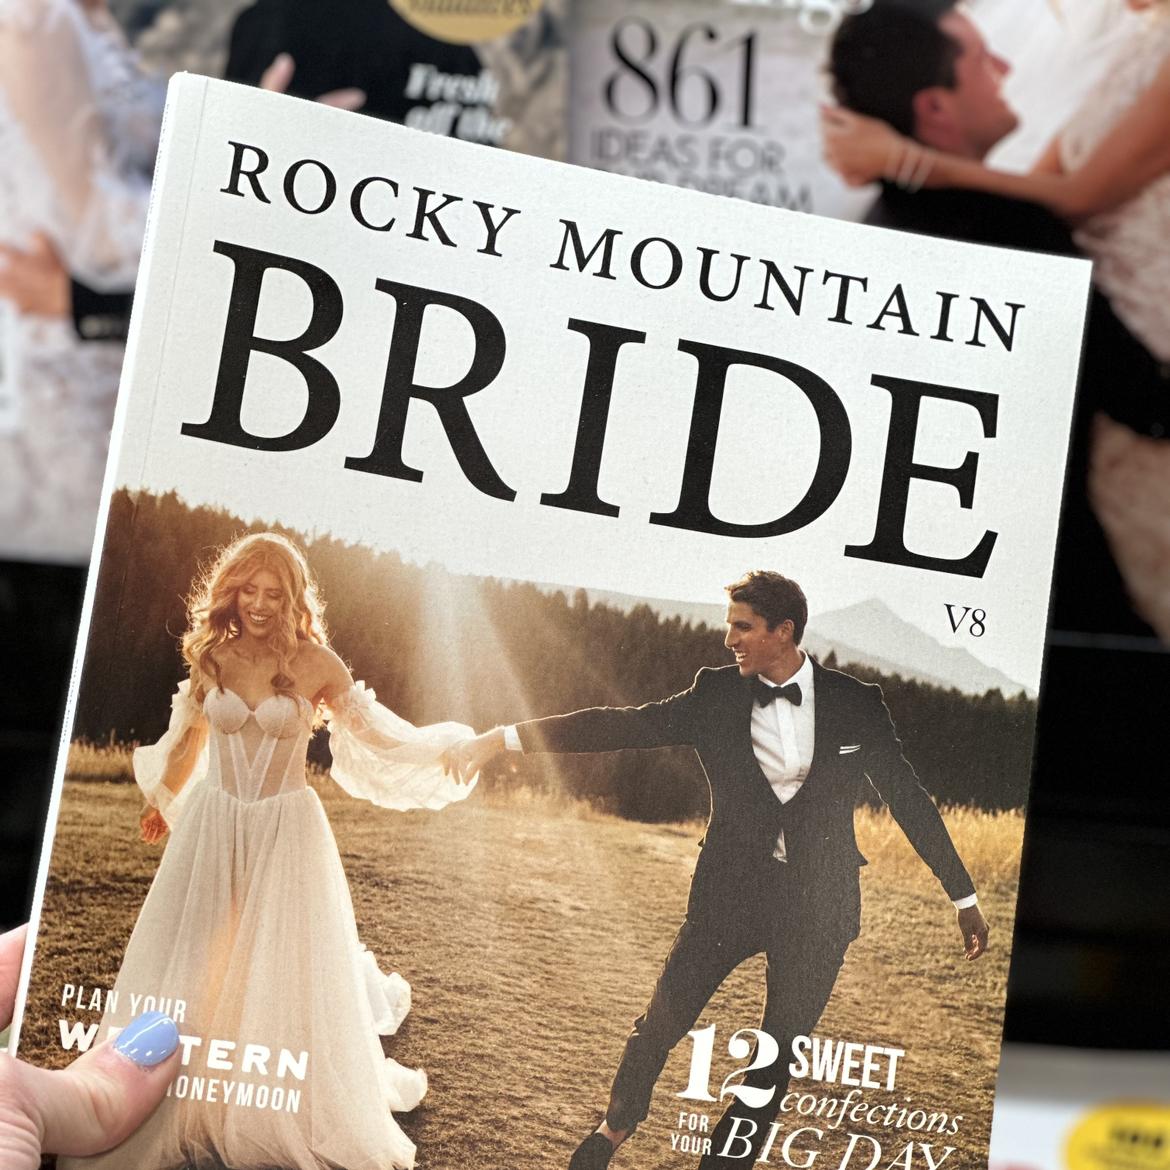 Rocky Mtn Bride's images